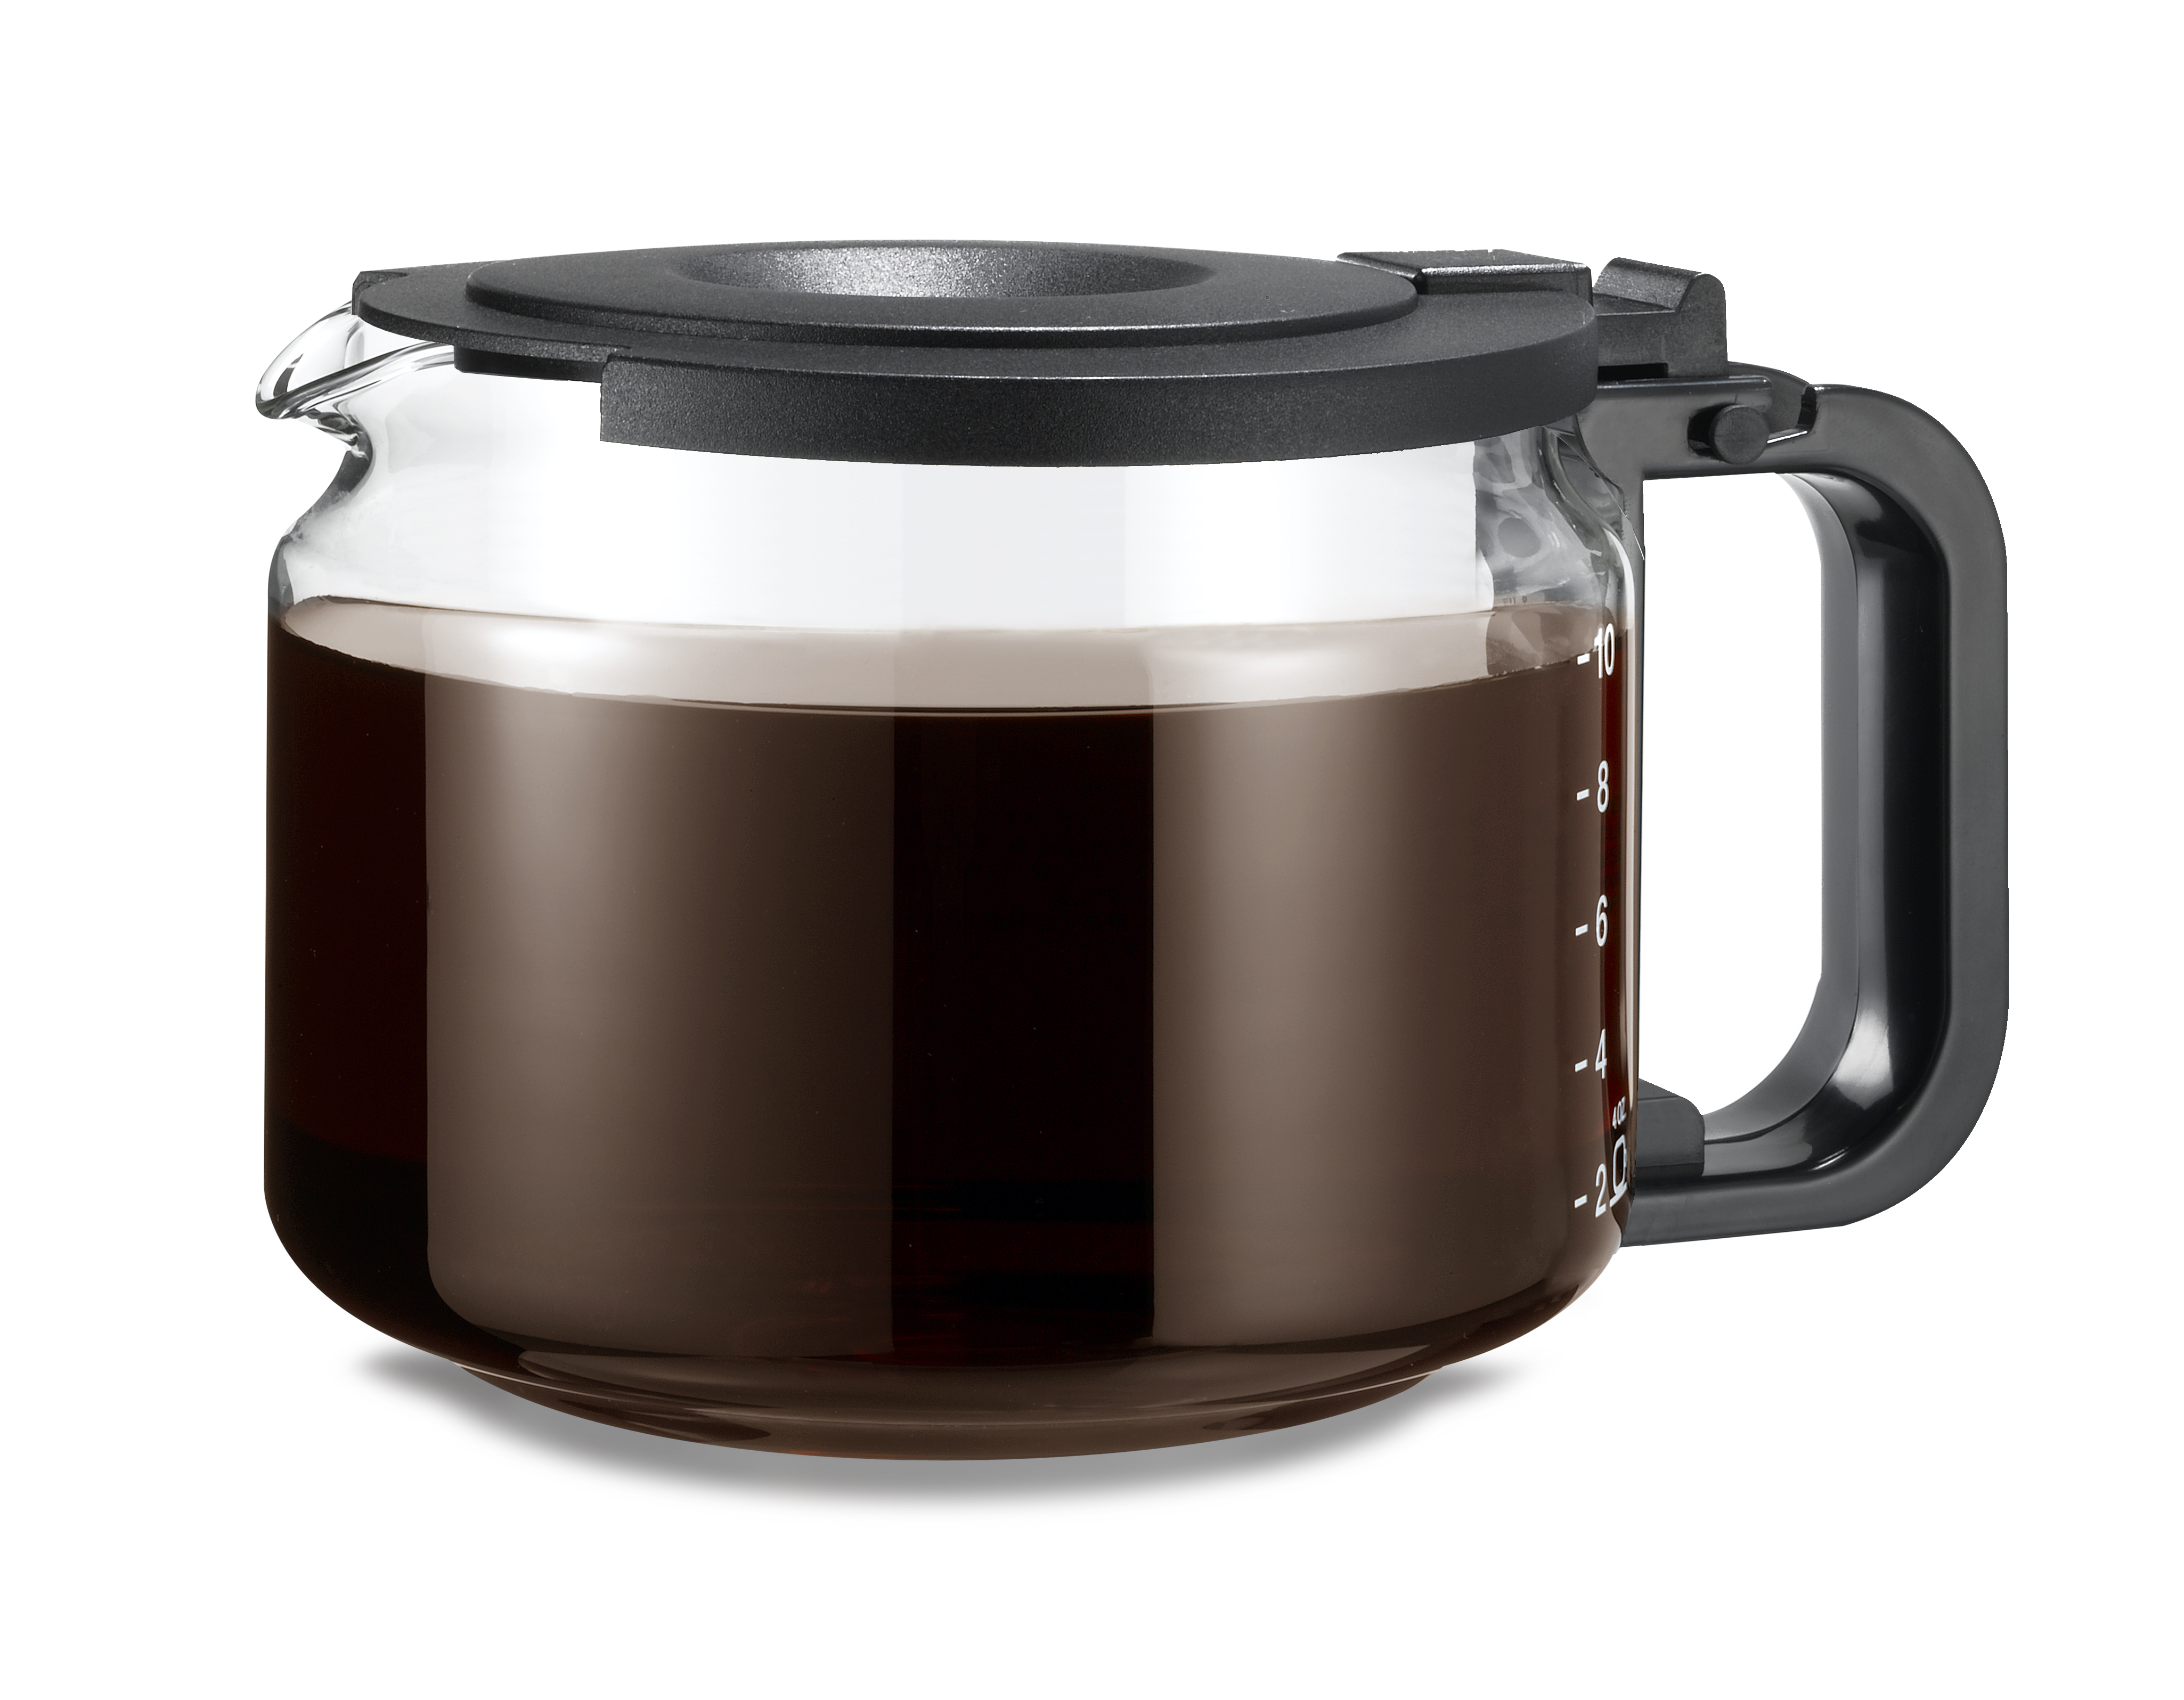 KRUPS 963 871 872 993 865 972 Espresso 4 Cup Glass Carafe Pot Black With Lid 